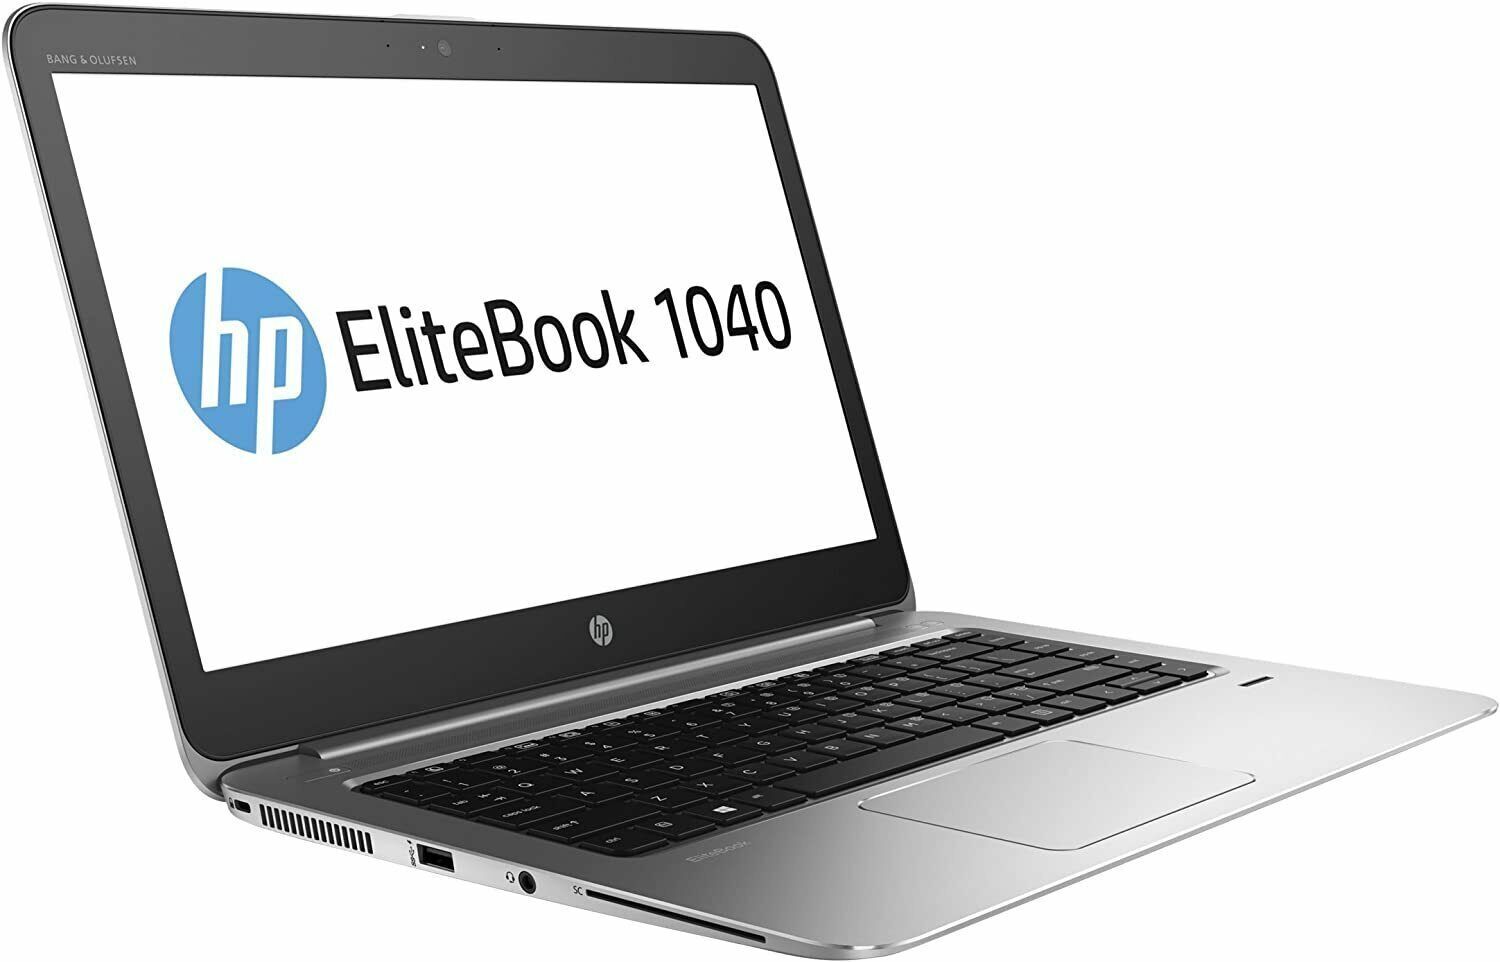 HP Elitebook Folio 1040 G3 i7 6600u 2.4Ghz 8GB RAM 512GB SSD 14" HD Win 10 - B Grade Image 2